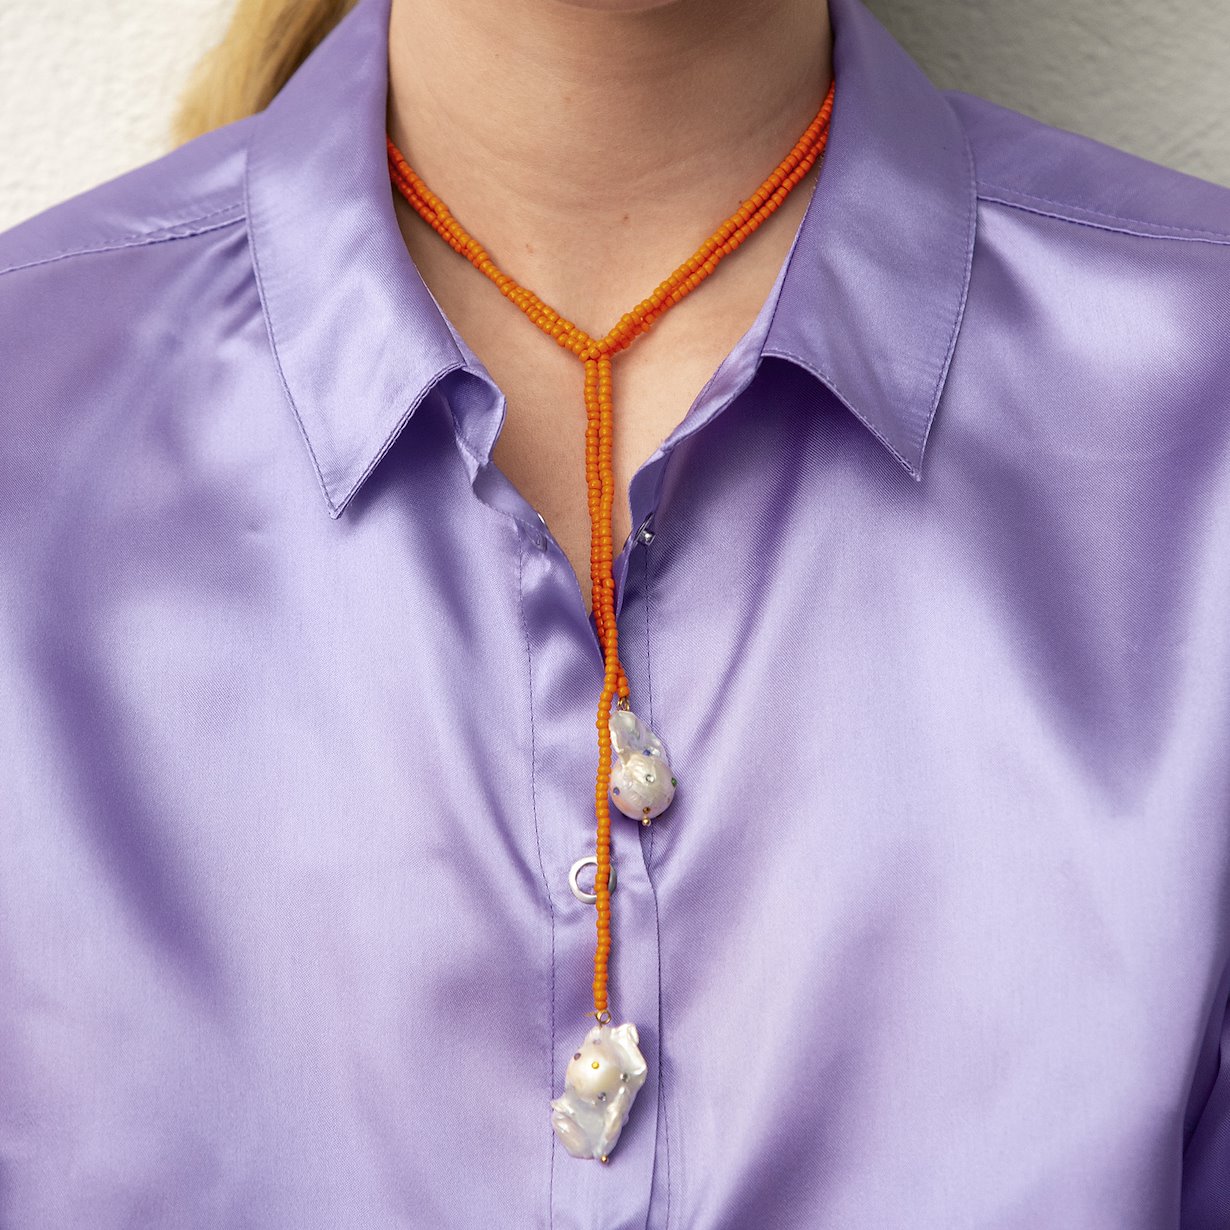 Prym Shirt Buttons - order online at !